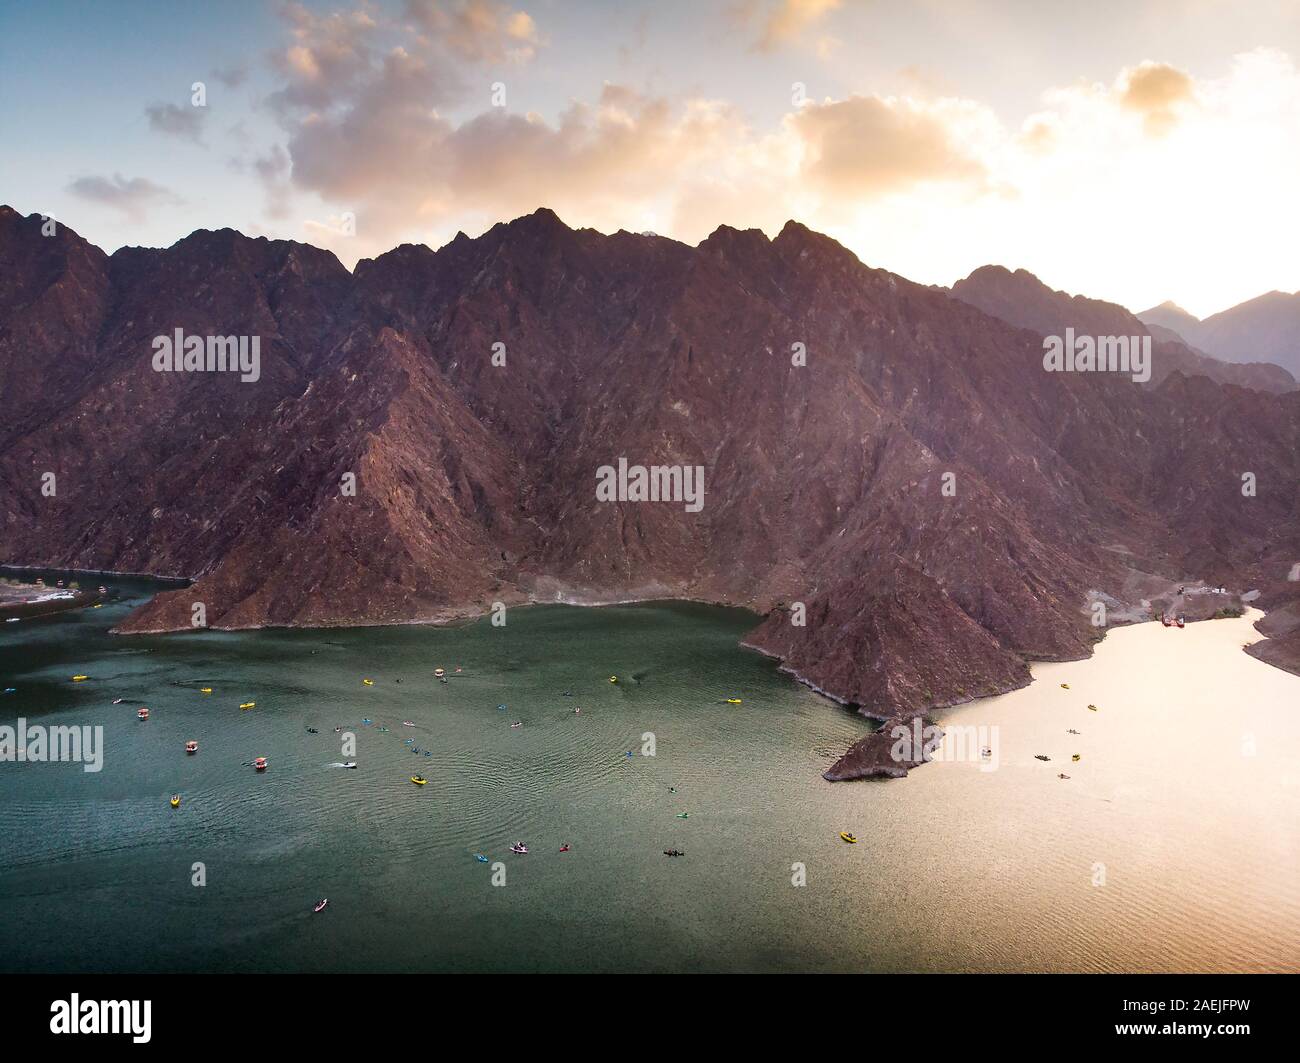 Hatta dam lake landscape in Dubai emirate of UAE at sunset Stock Photo